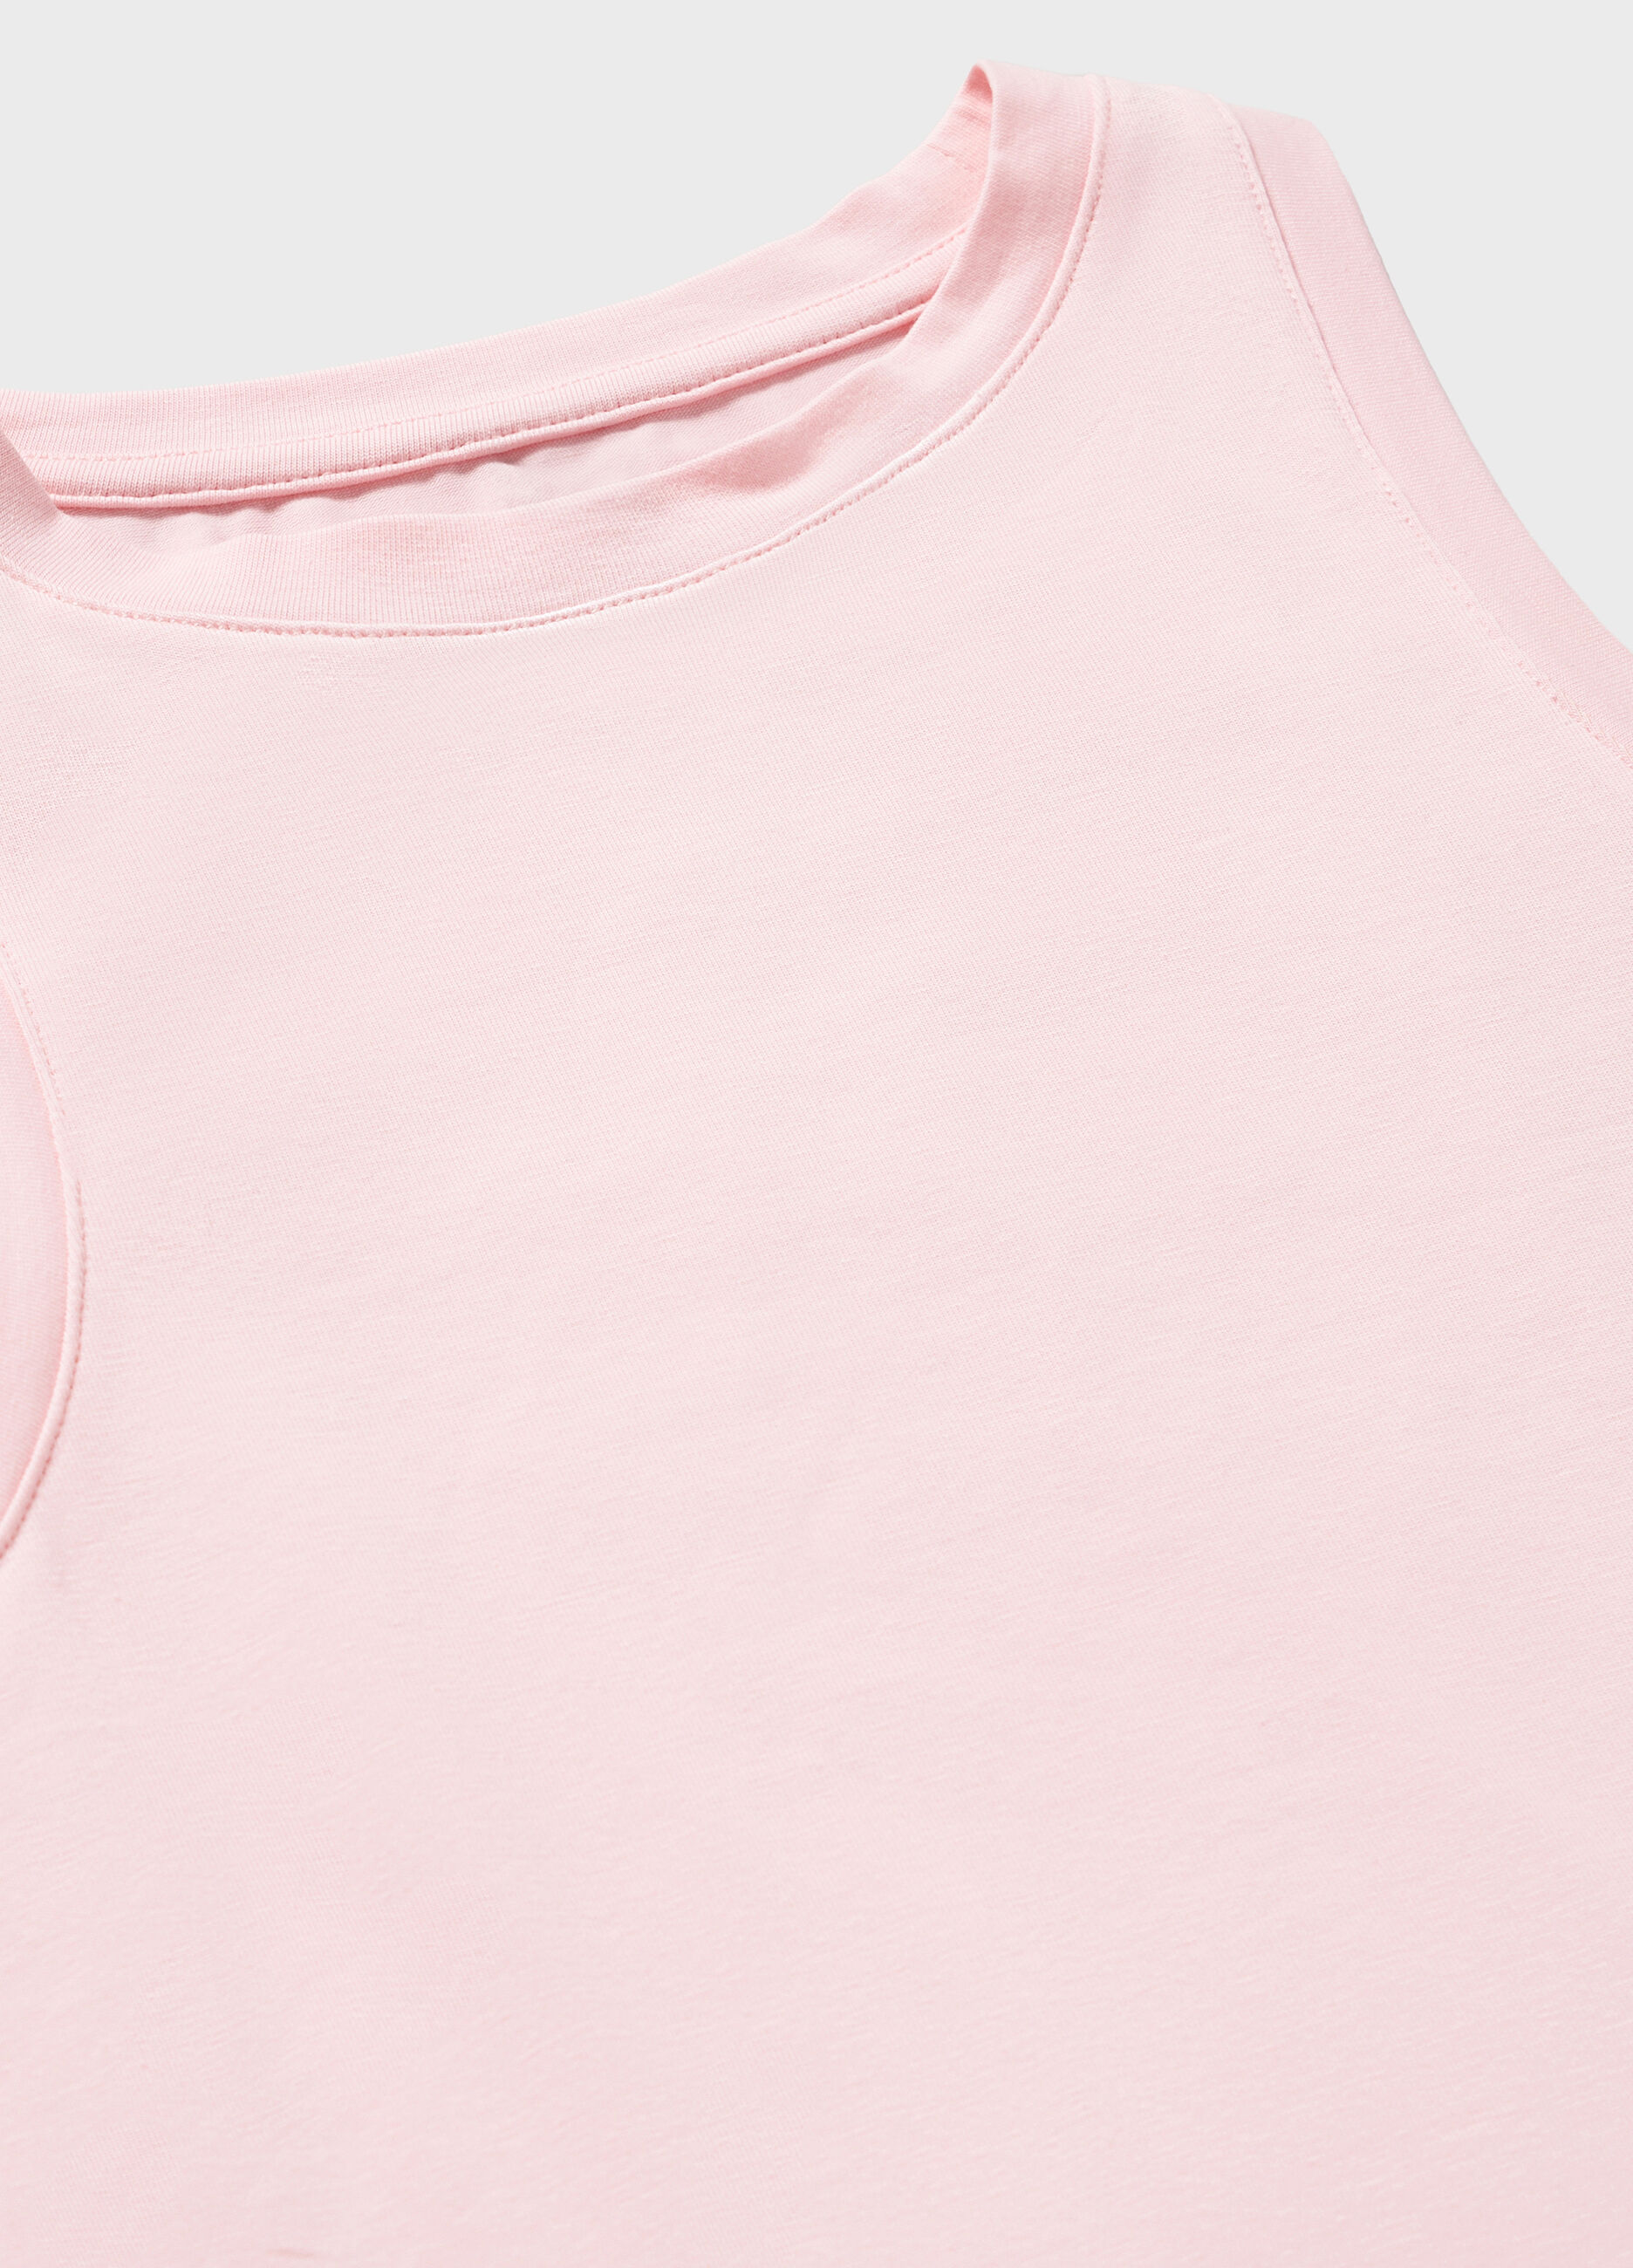 Pink stretch cotton sleeveless top_6